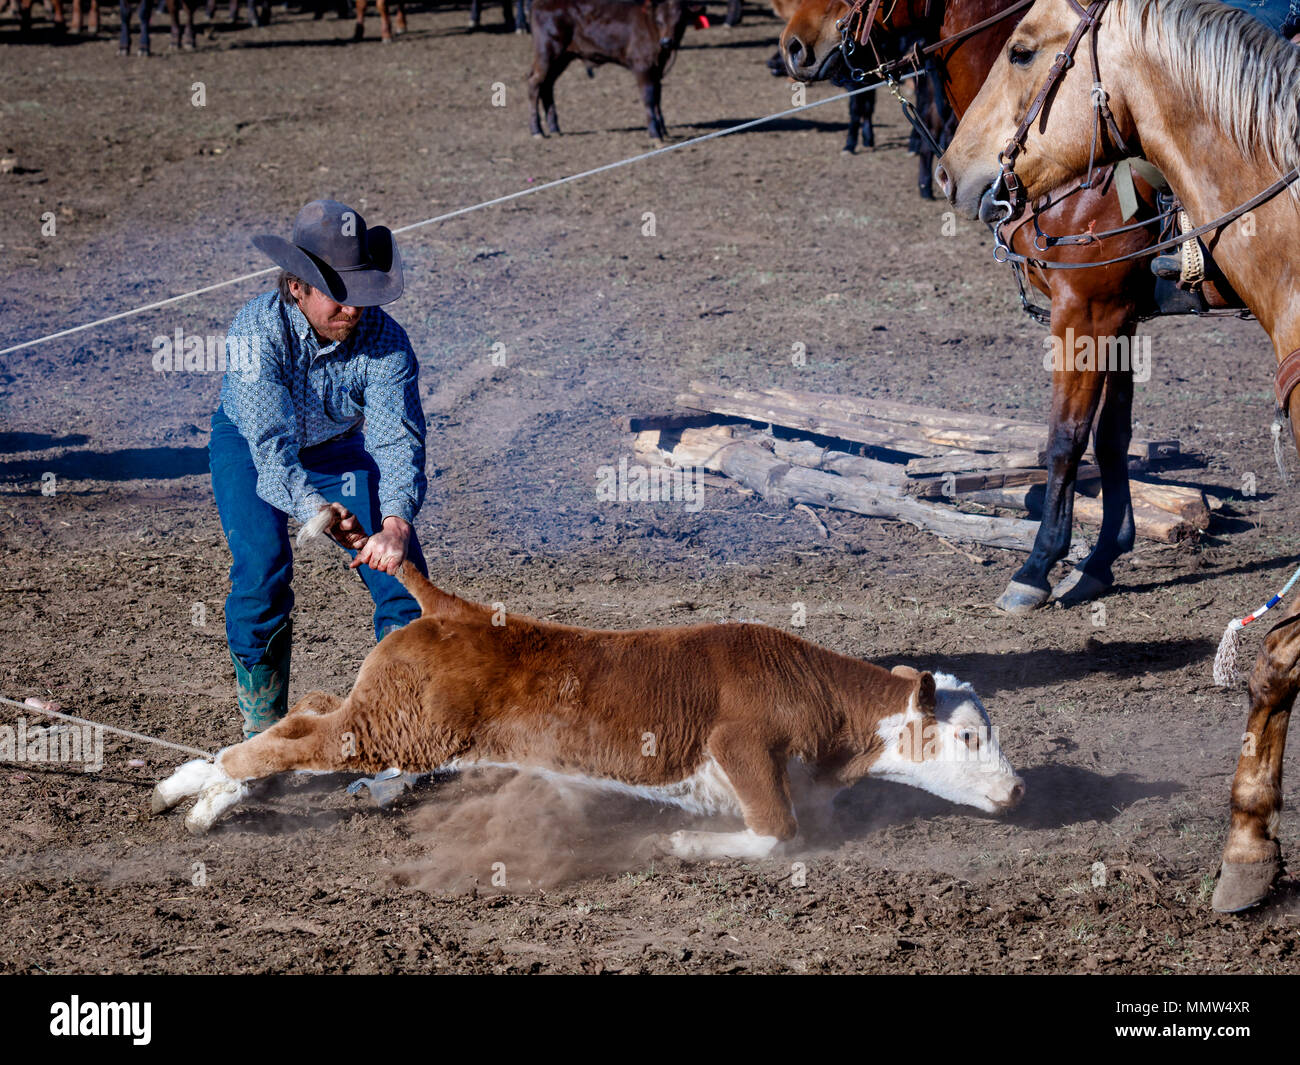 MAY 23, 2017 - LA SAL MOUNTAINS, UTAH -Cowboys brand Cattle near La Sal, Utah off Route 46 near Colorado-Utah border - near Manti-La Sal National Foest Stock Photo